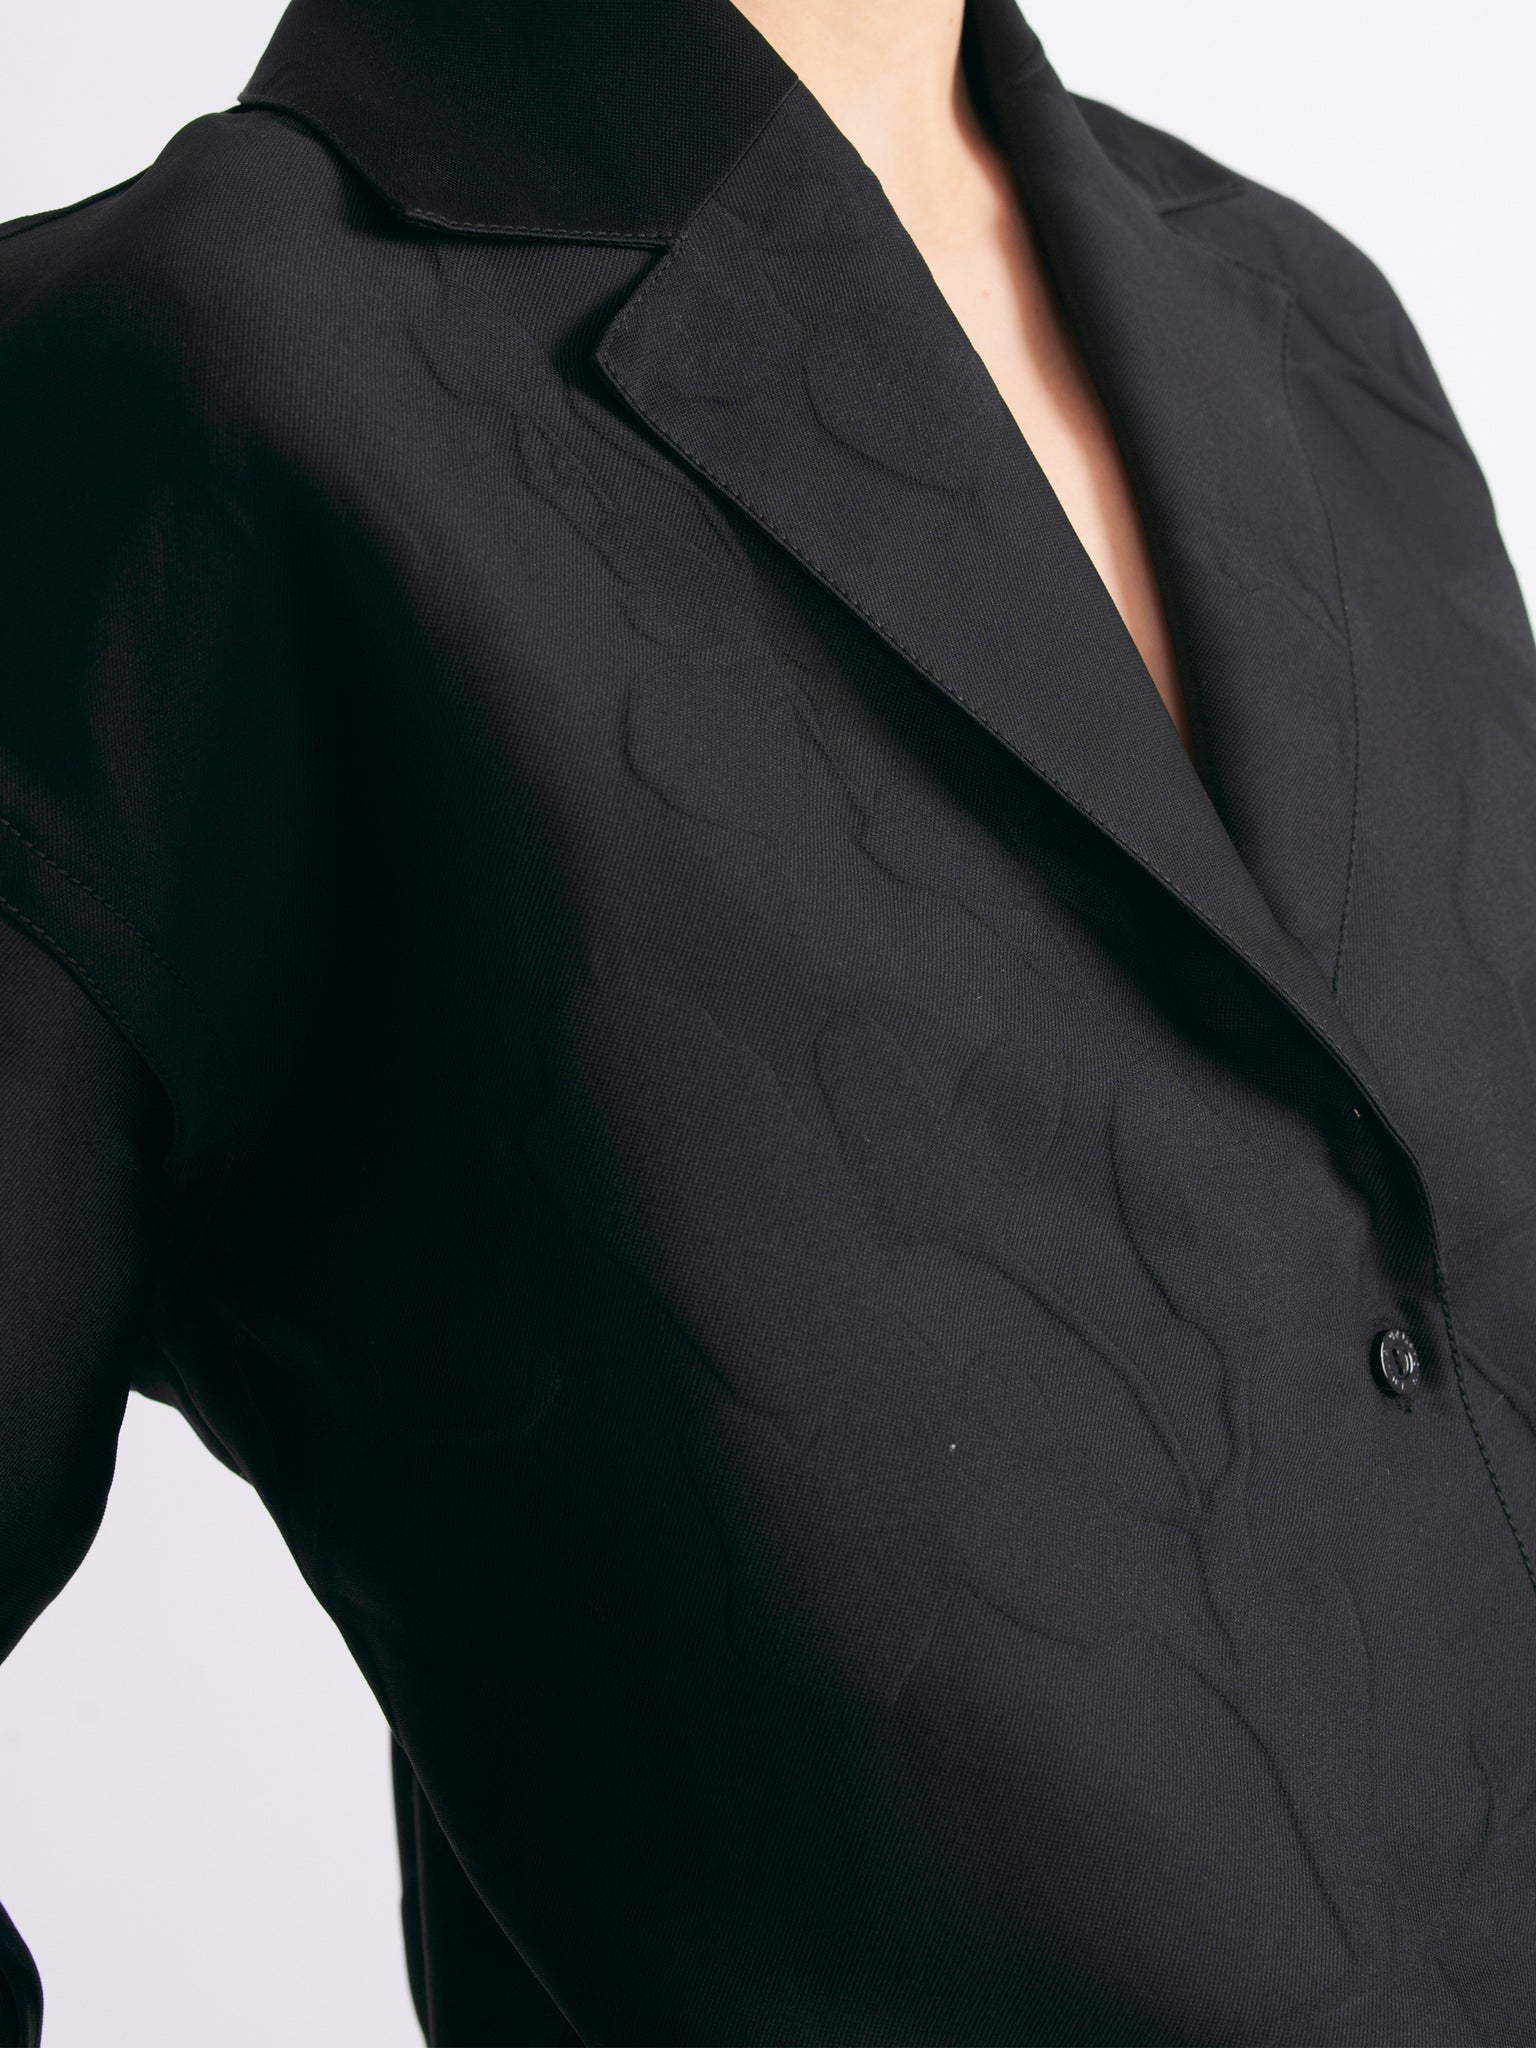 Arona Shirt in Black Embossed Cloque